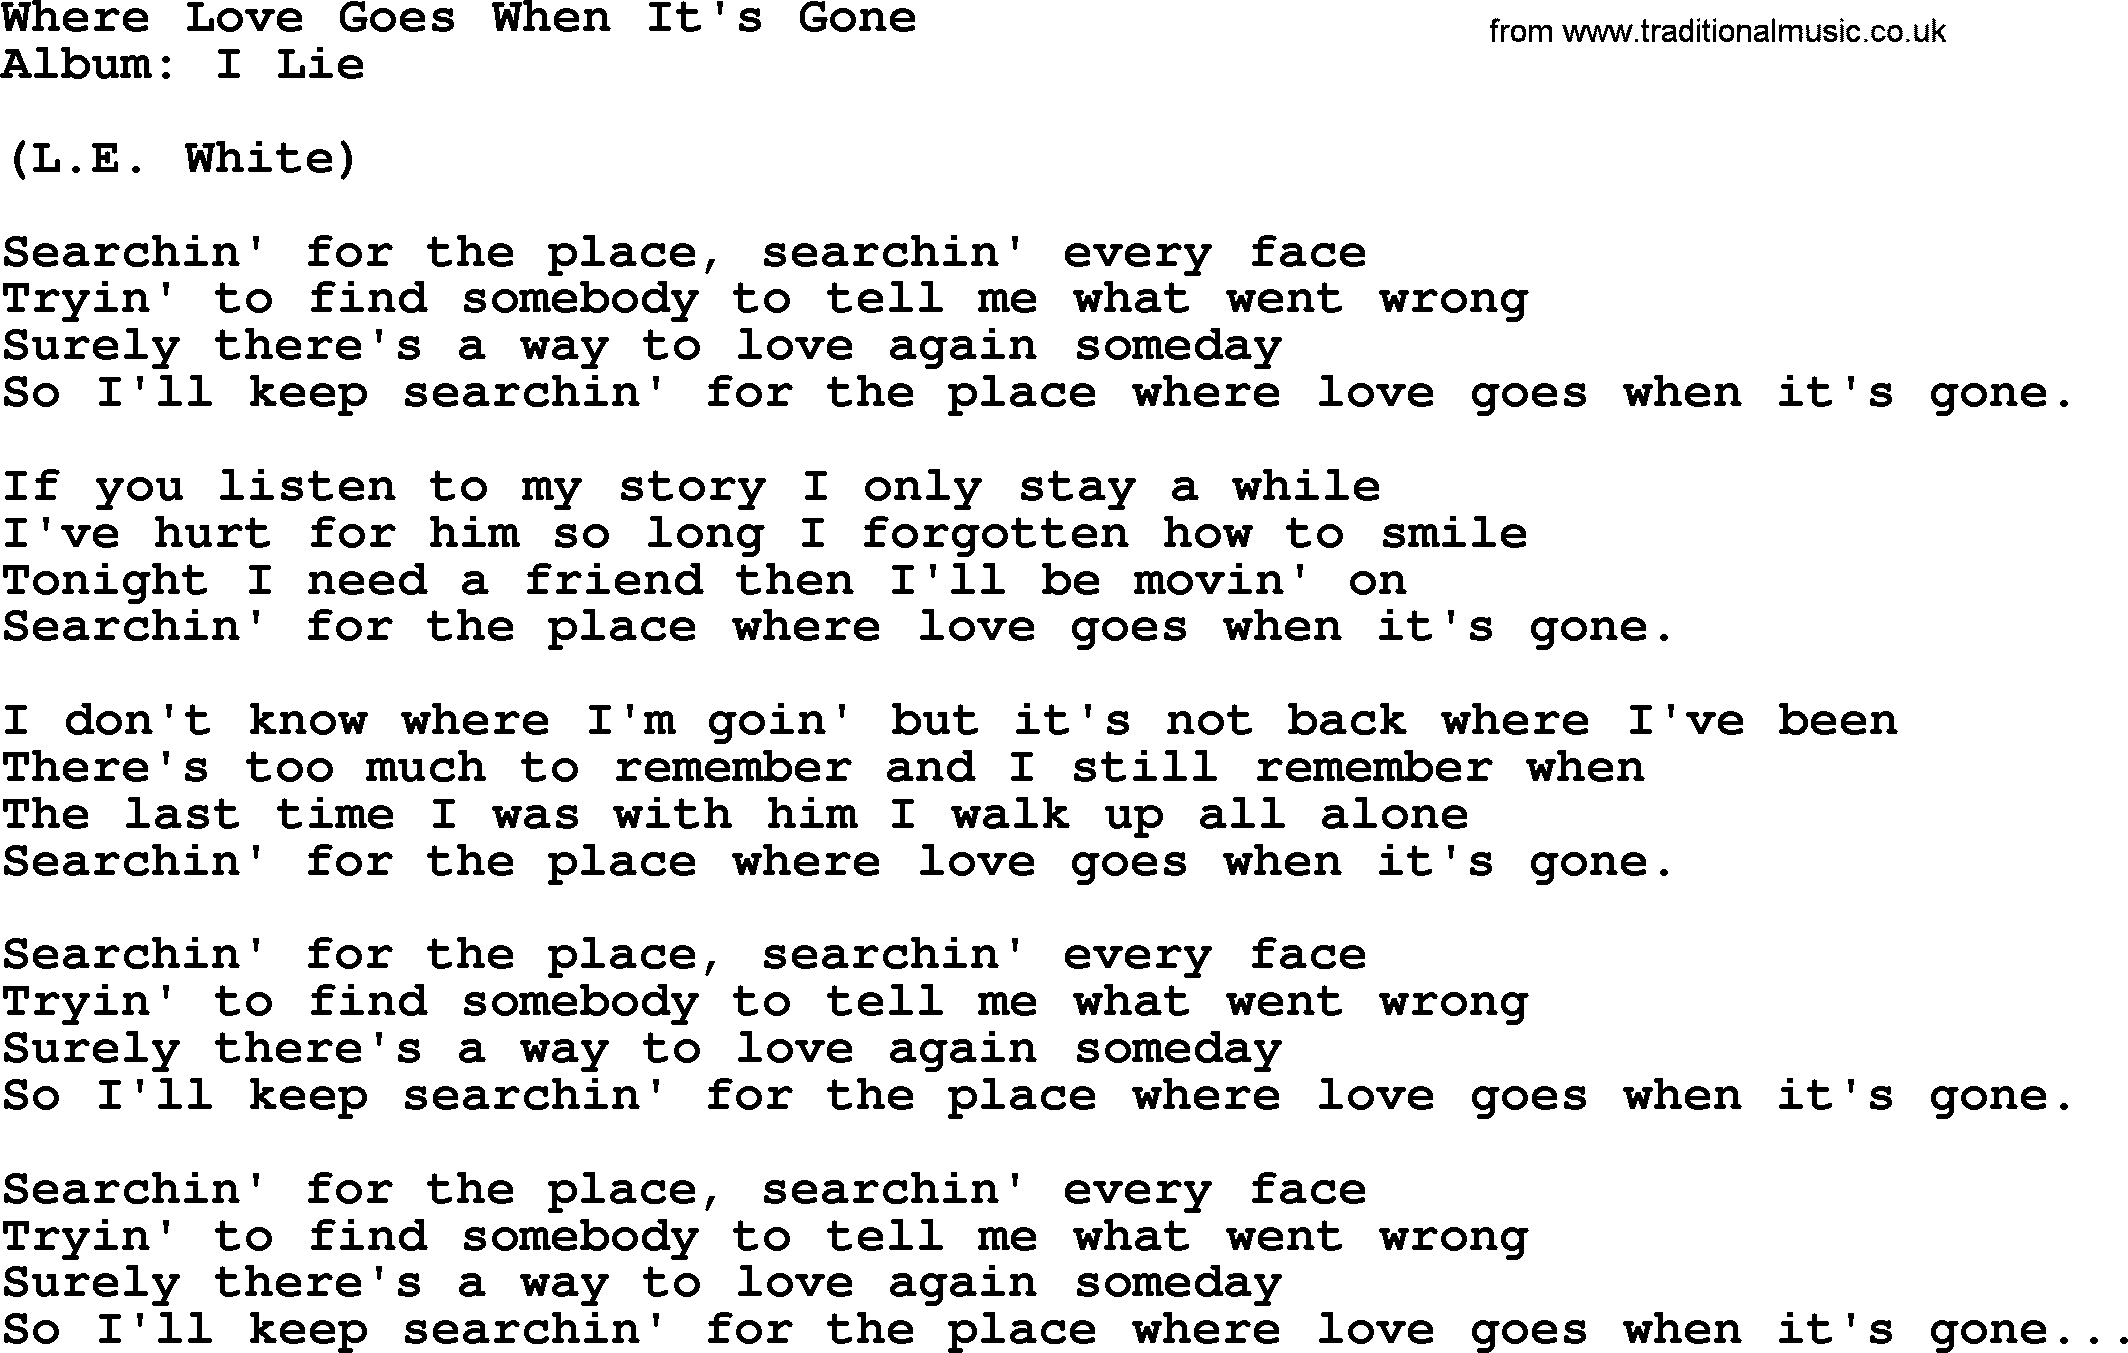 Loretta Lynn song: Where Love Goes When It's Gone lyrics